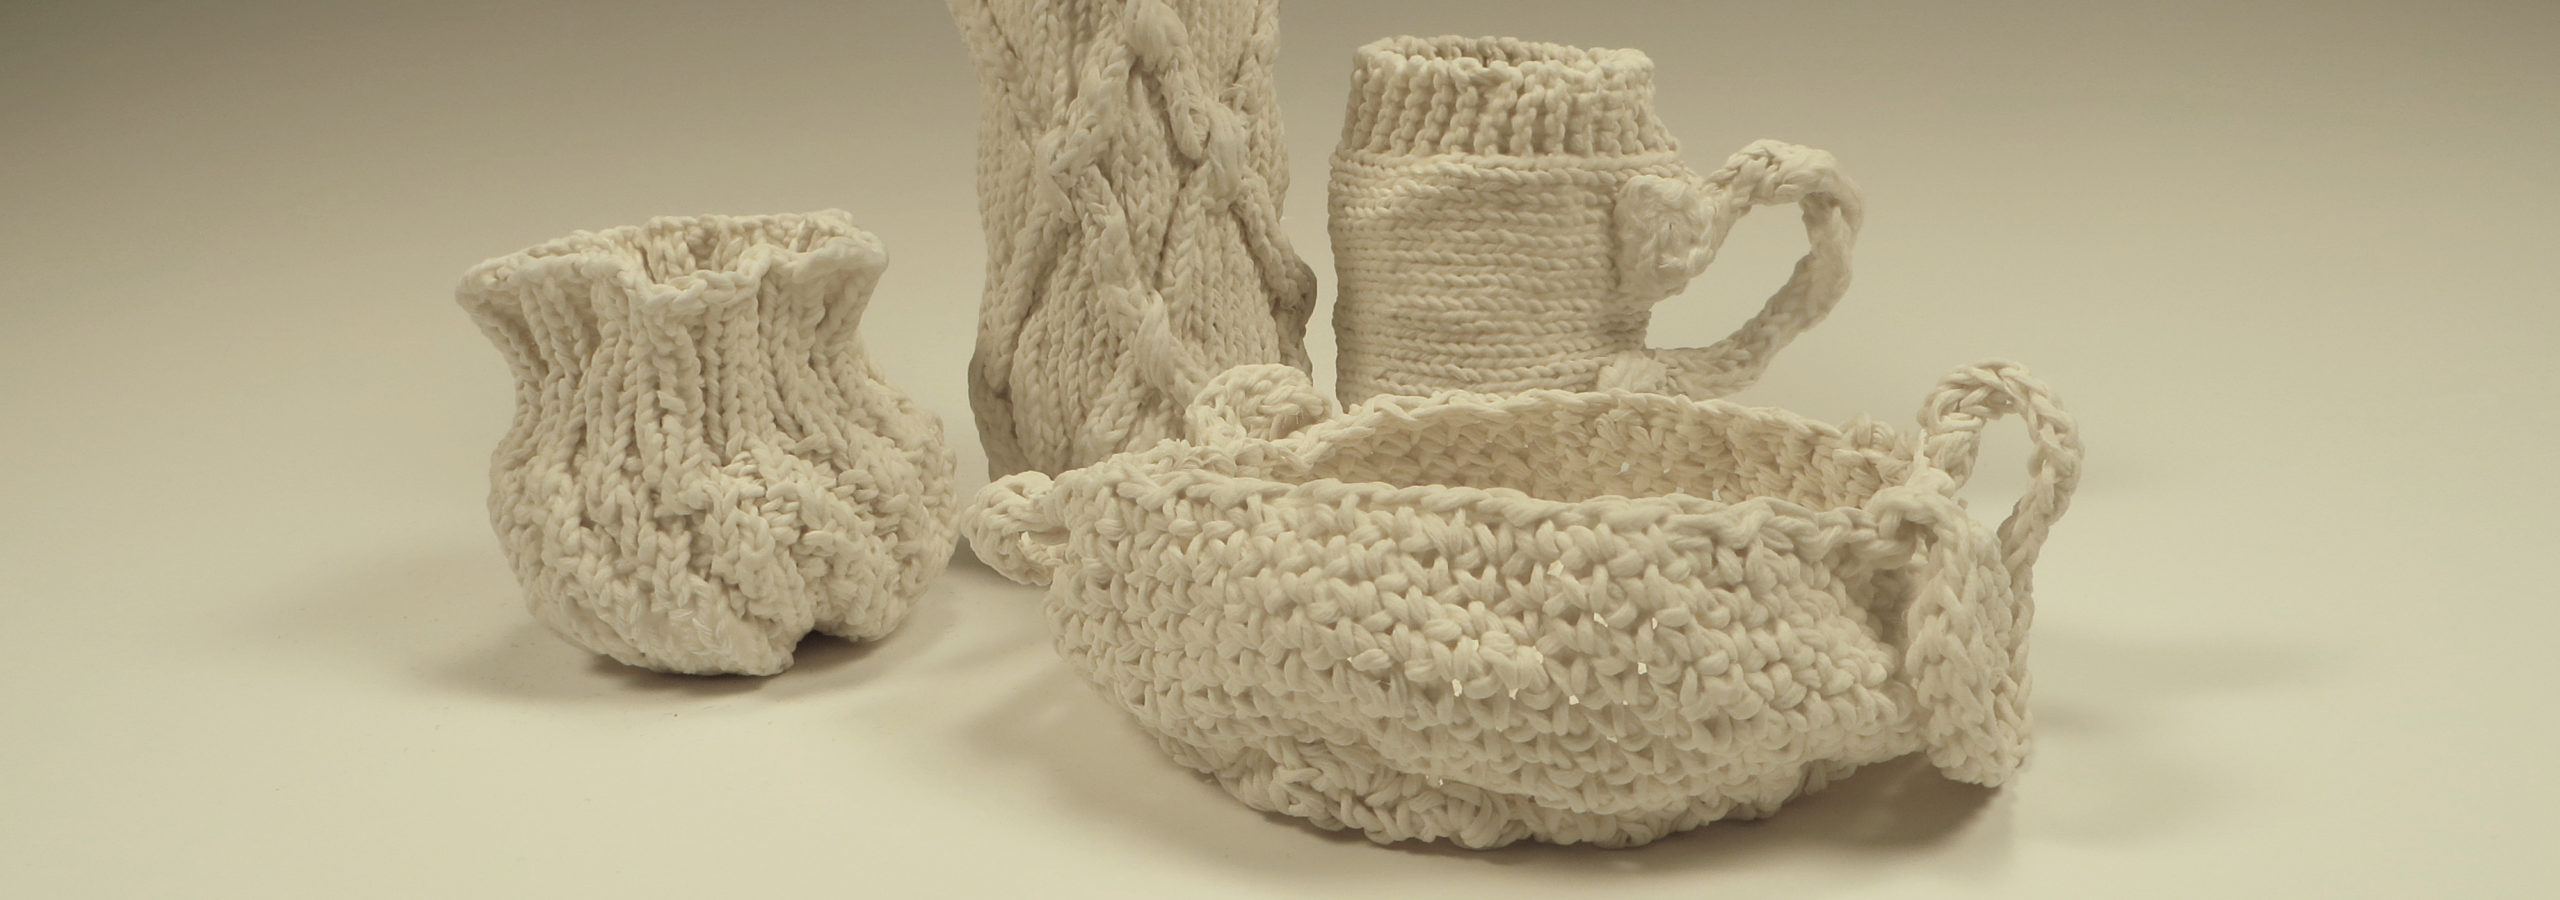 Knitted Porcelains - Liz Crain Ceramics